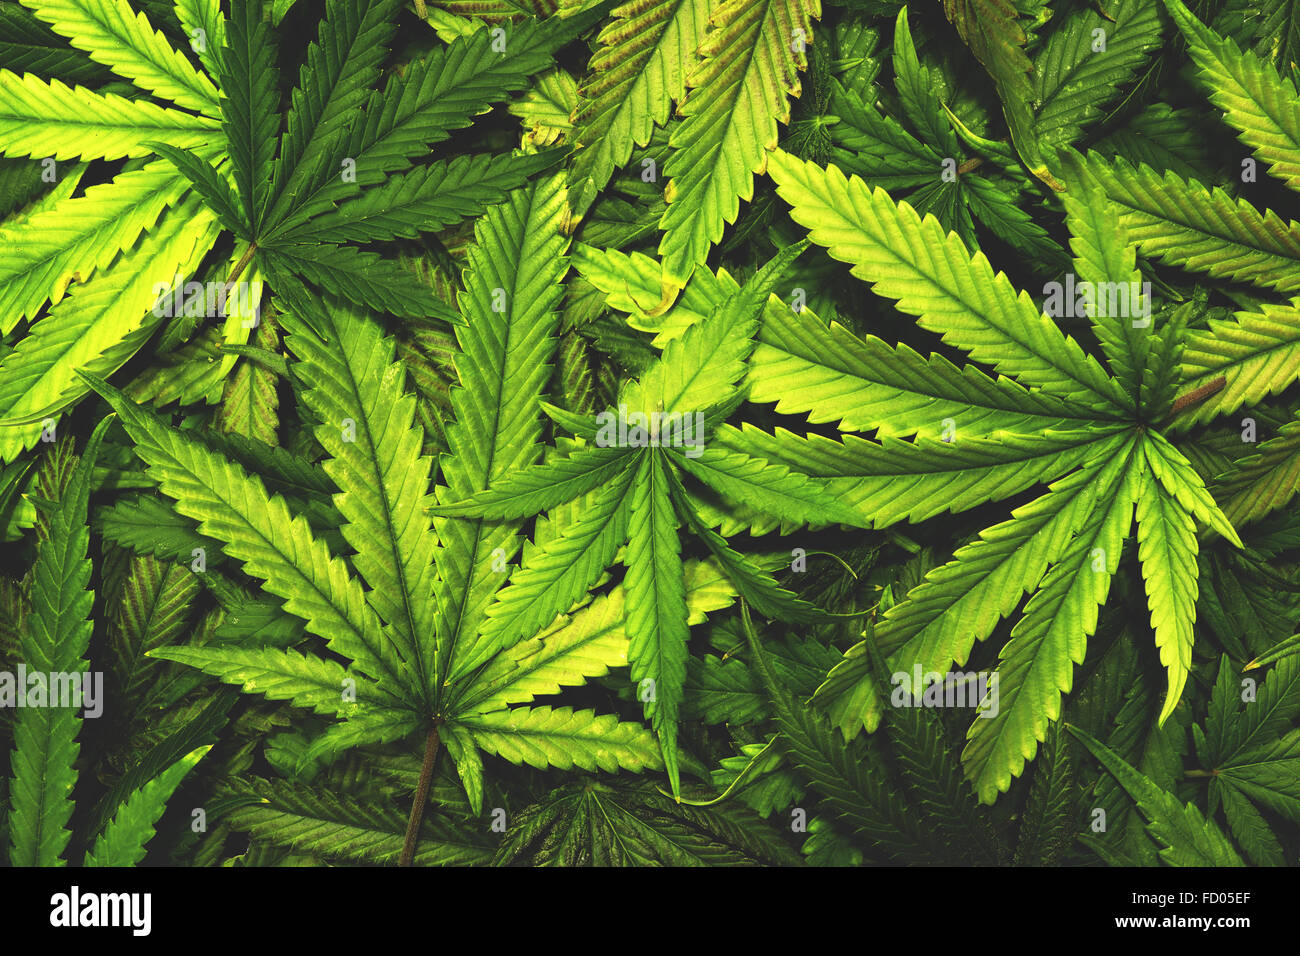 https://c8.alamy.com/comp/FD05EF/cannabis-texture-marijuana-leaf-pile-background-with-flat-vintage-FD05EF.jpg